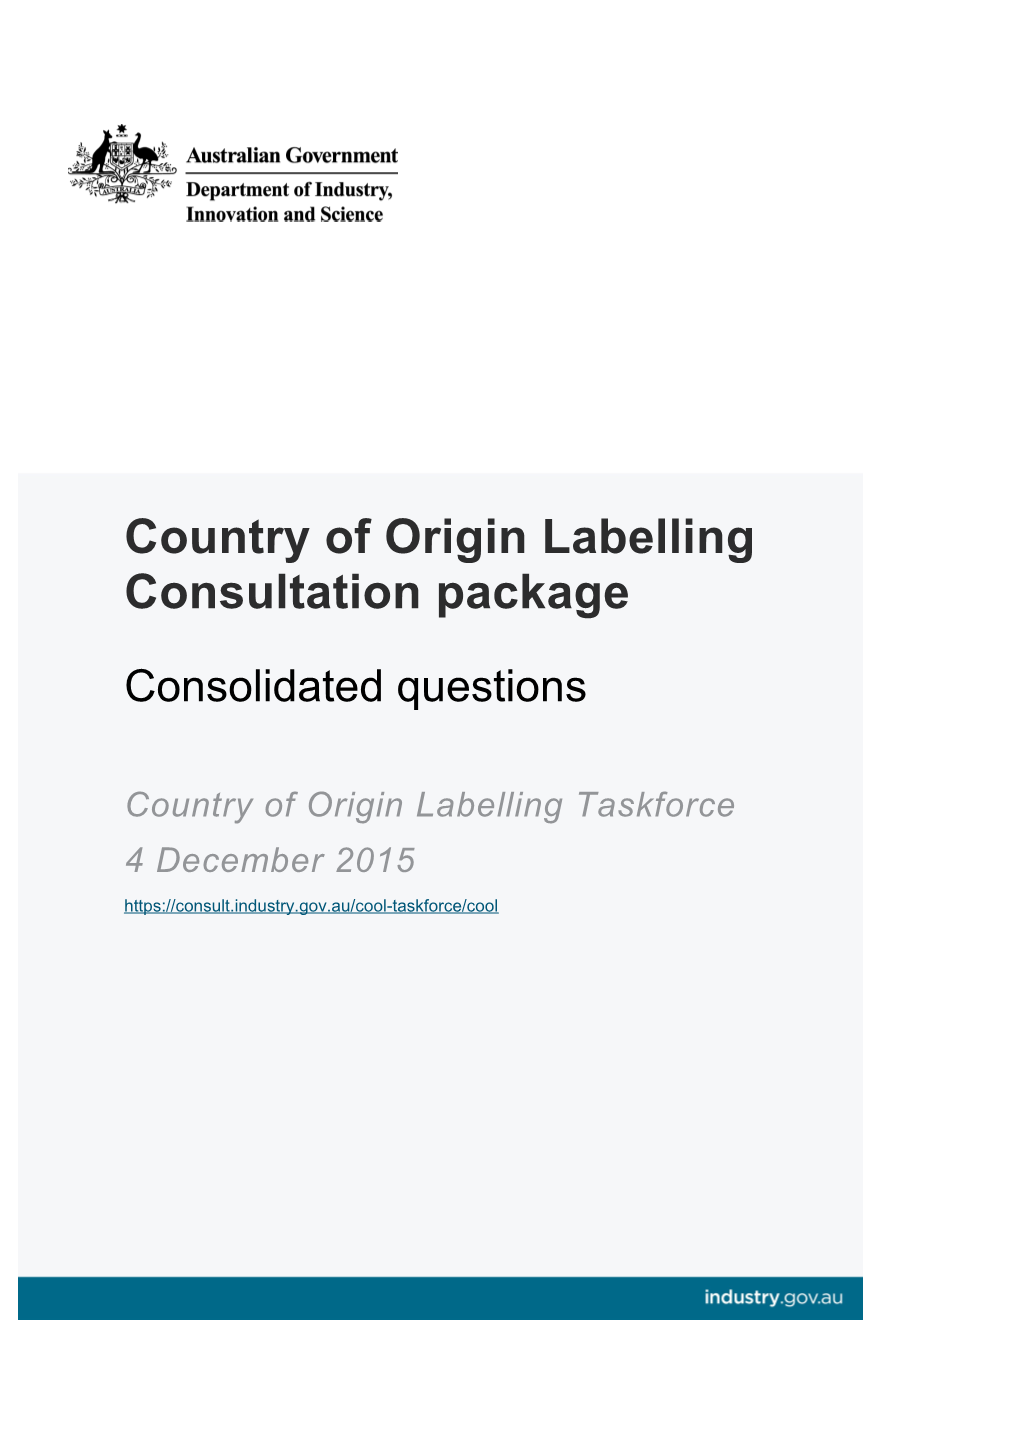 Country of Origin Labelling Taskforce